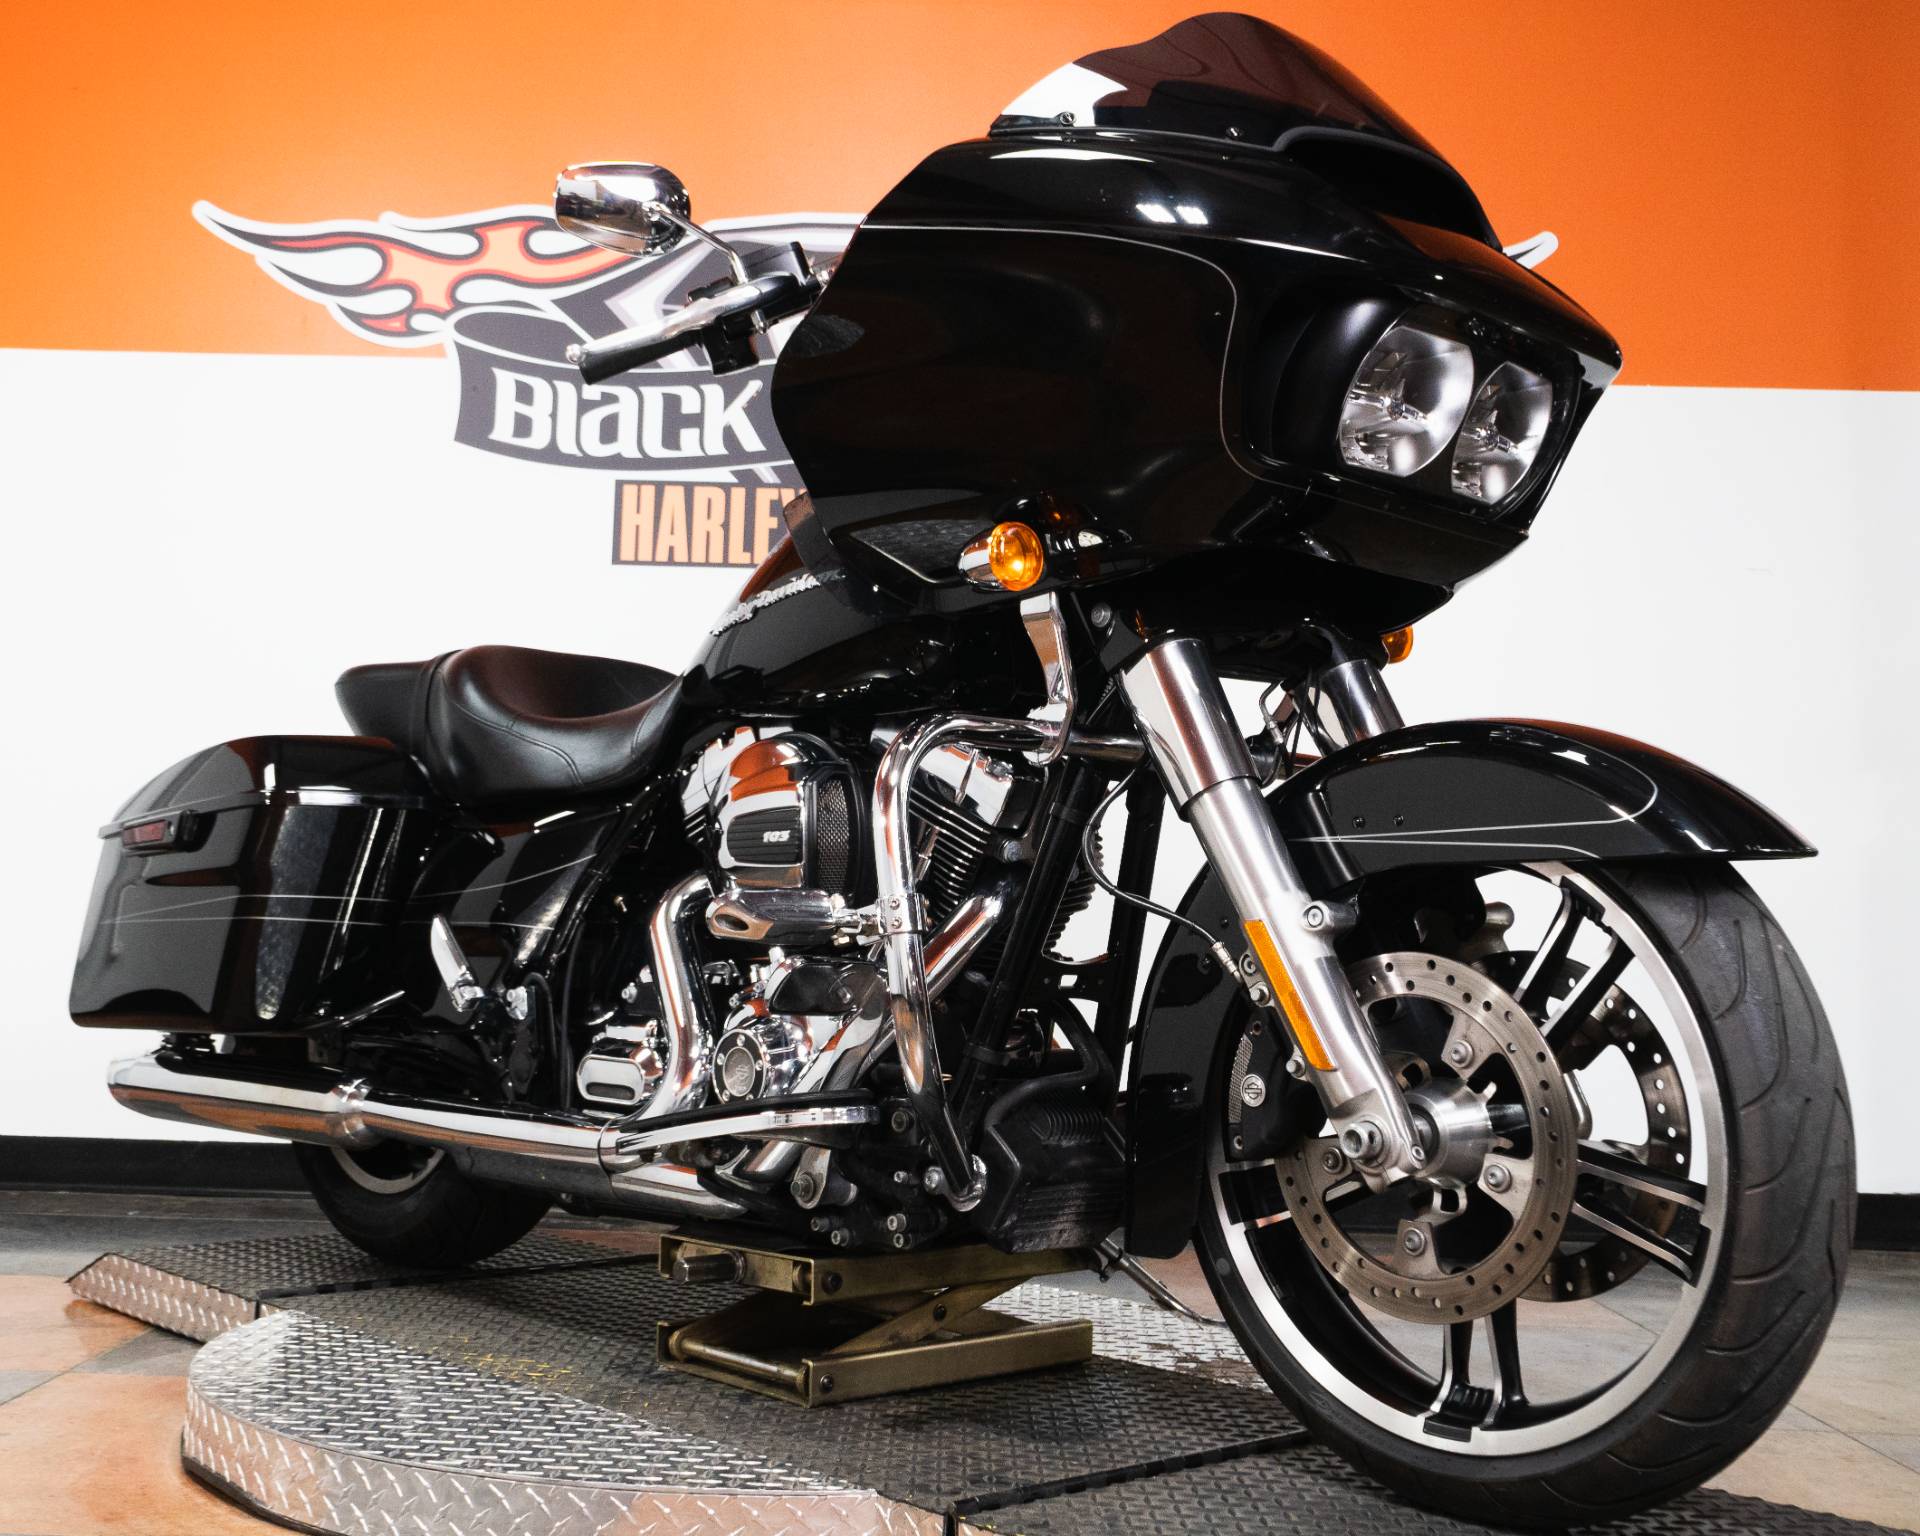 Used 2015 Harley Davidson Road Glide Special Vivid Black Motorcycles In Marion Il U640113